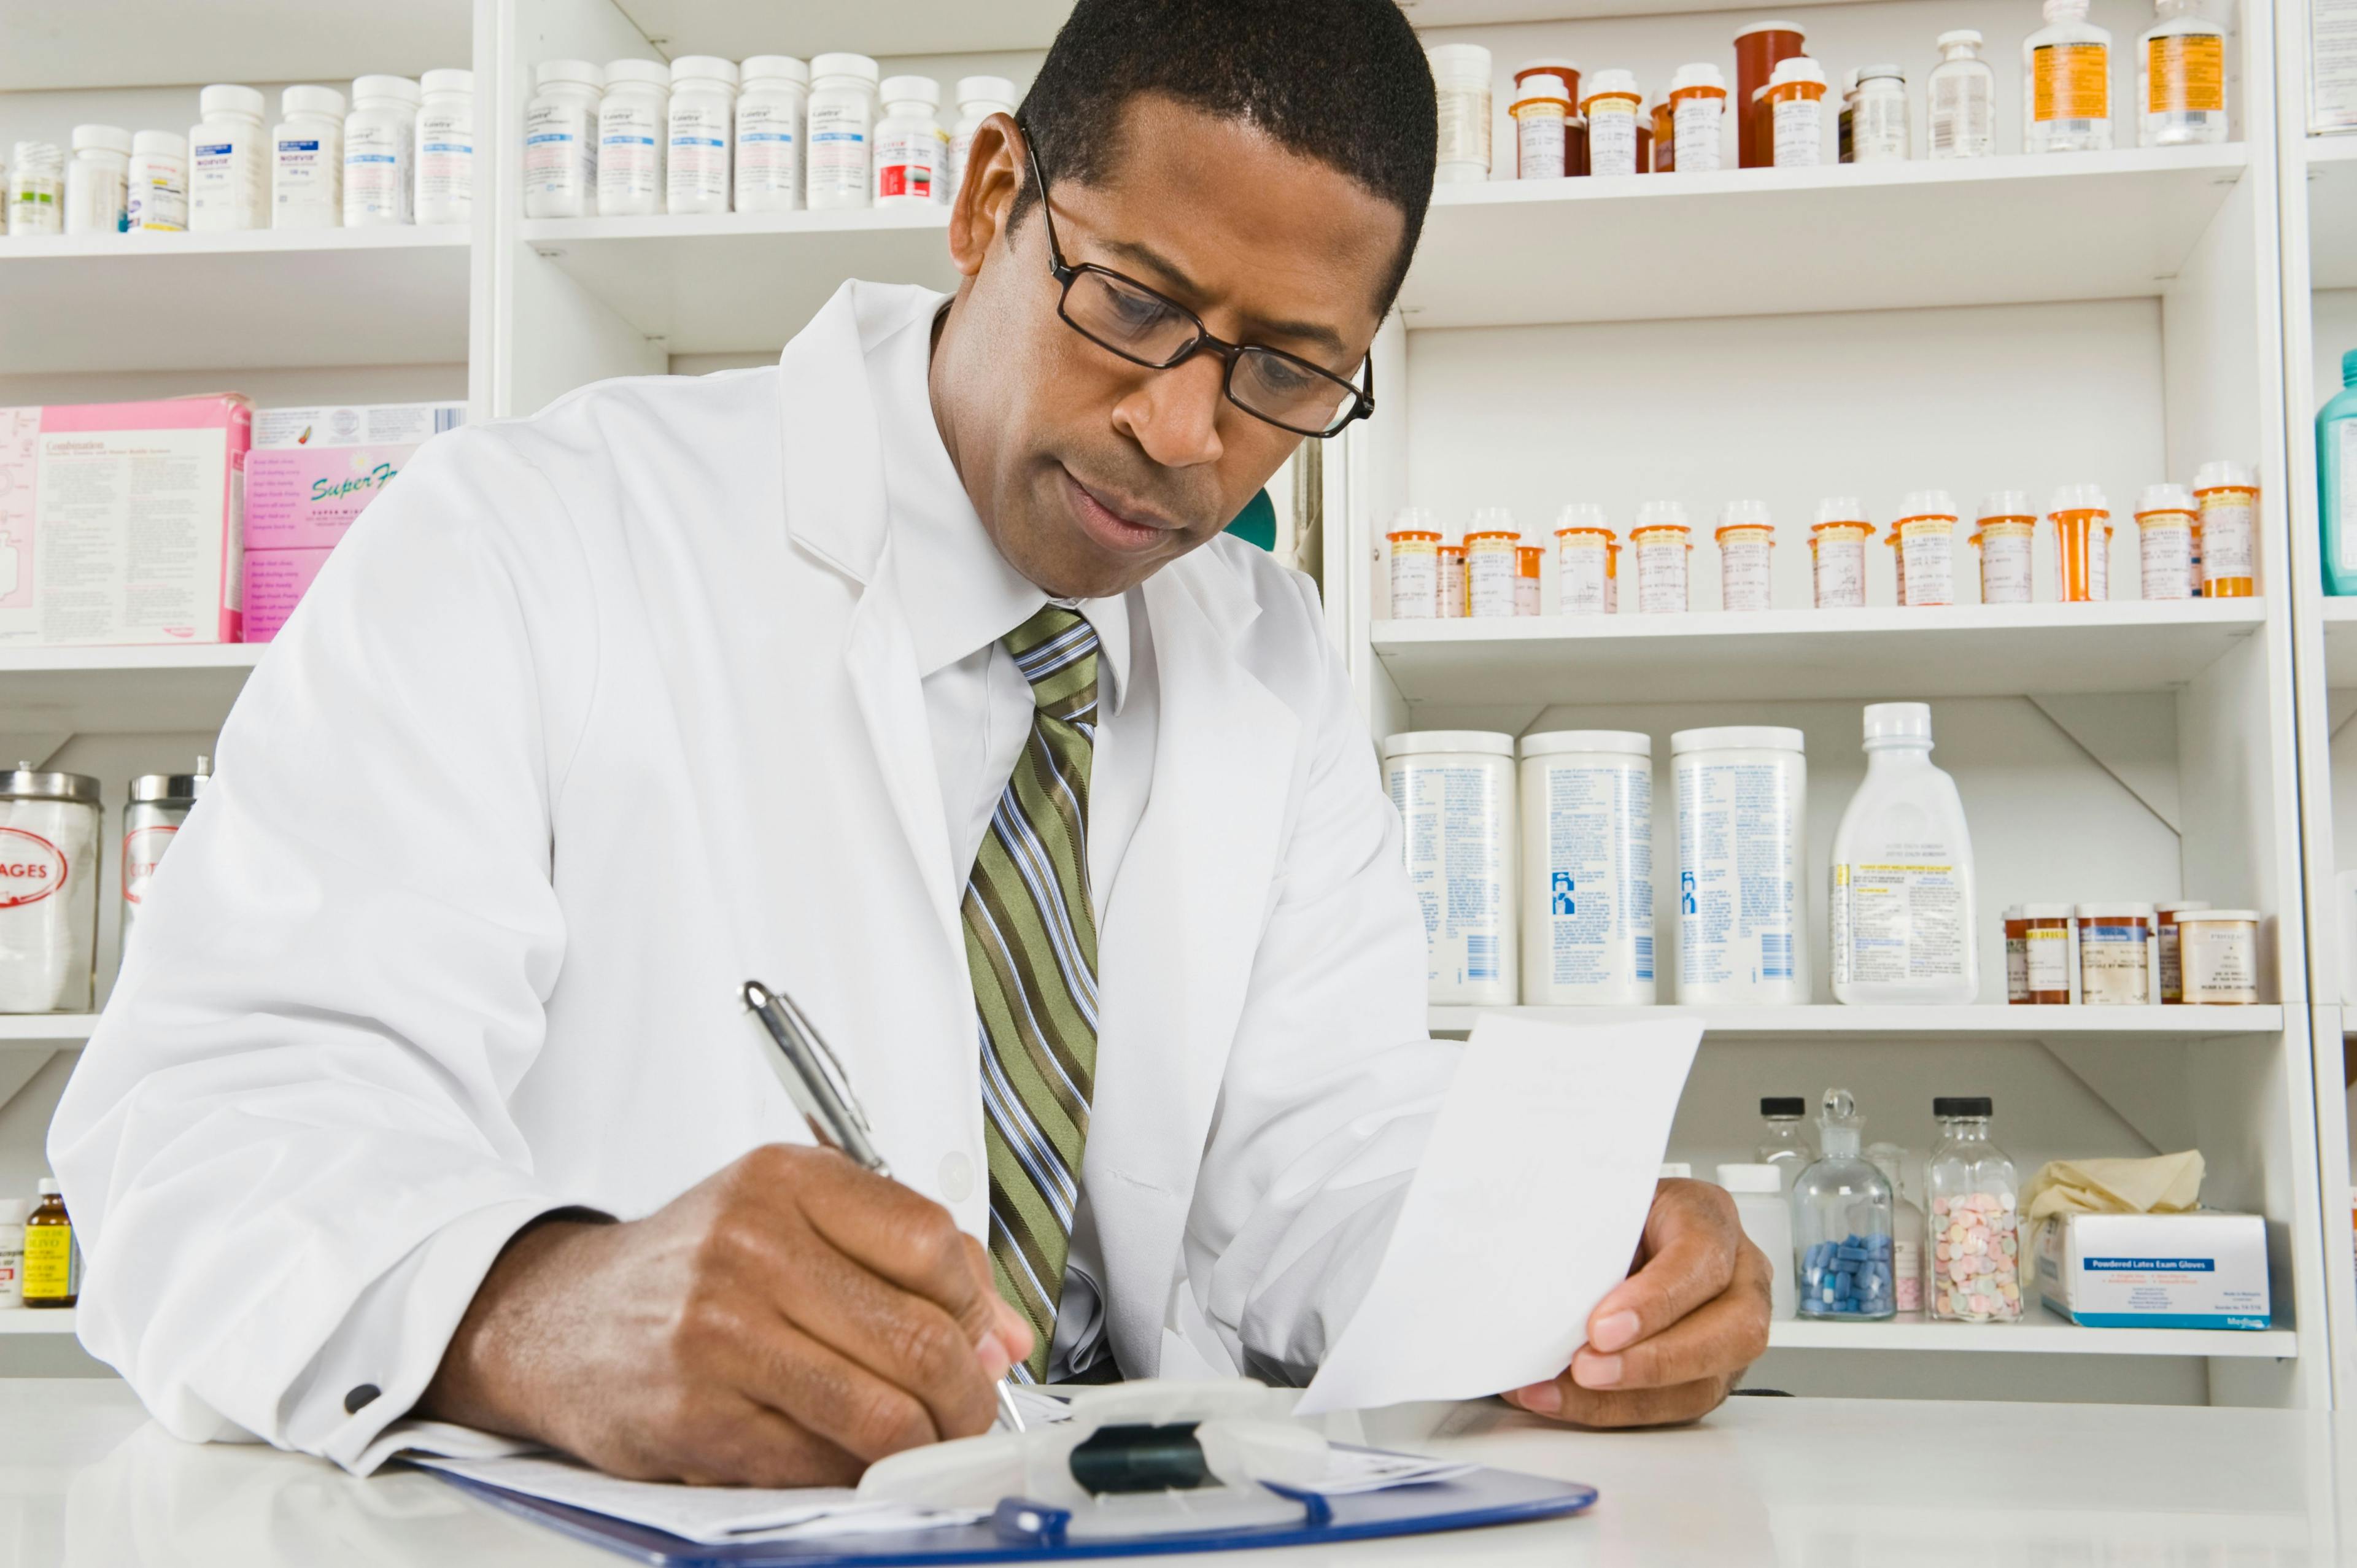 Pharmacist working in pharmacy -- Image credit: moodboard | stock.adobe.com